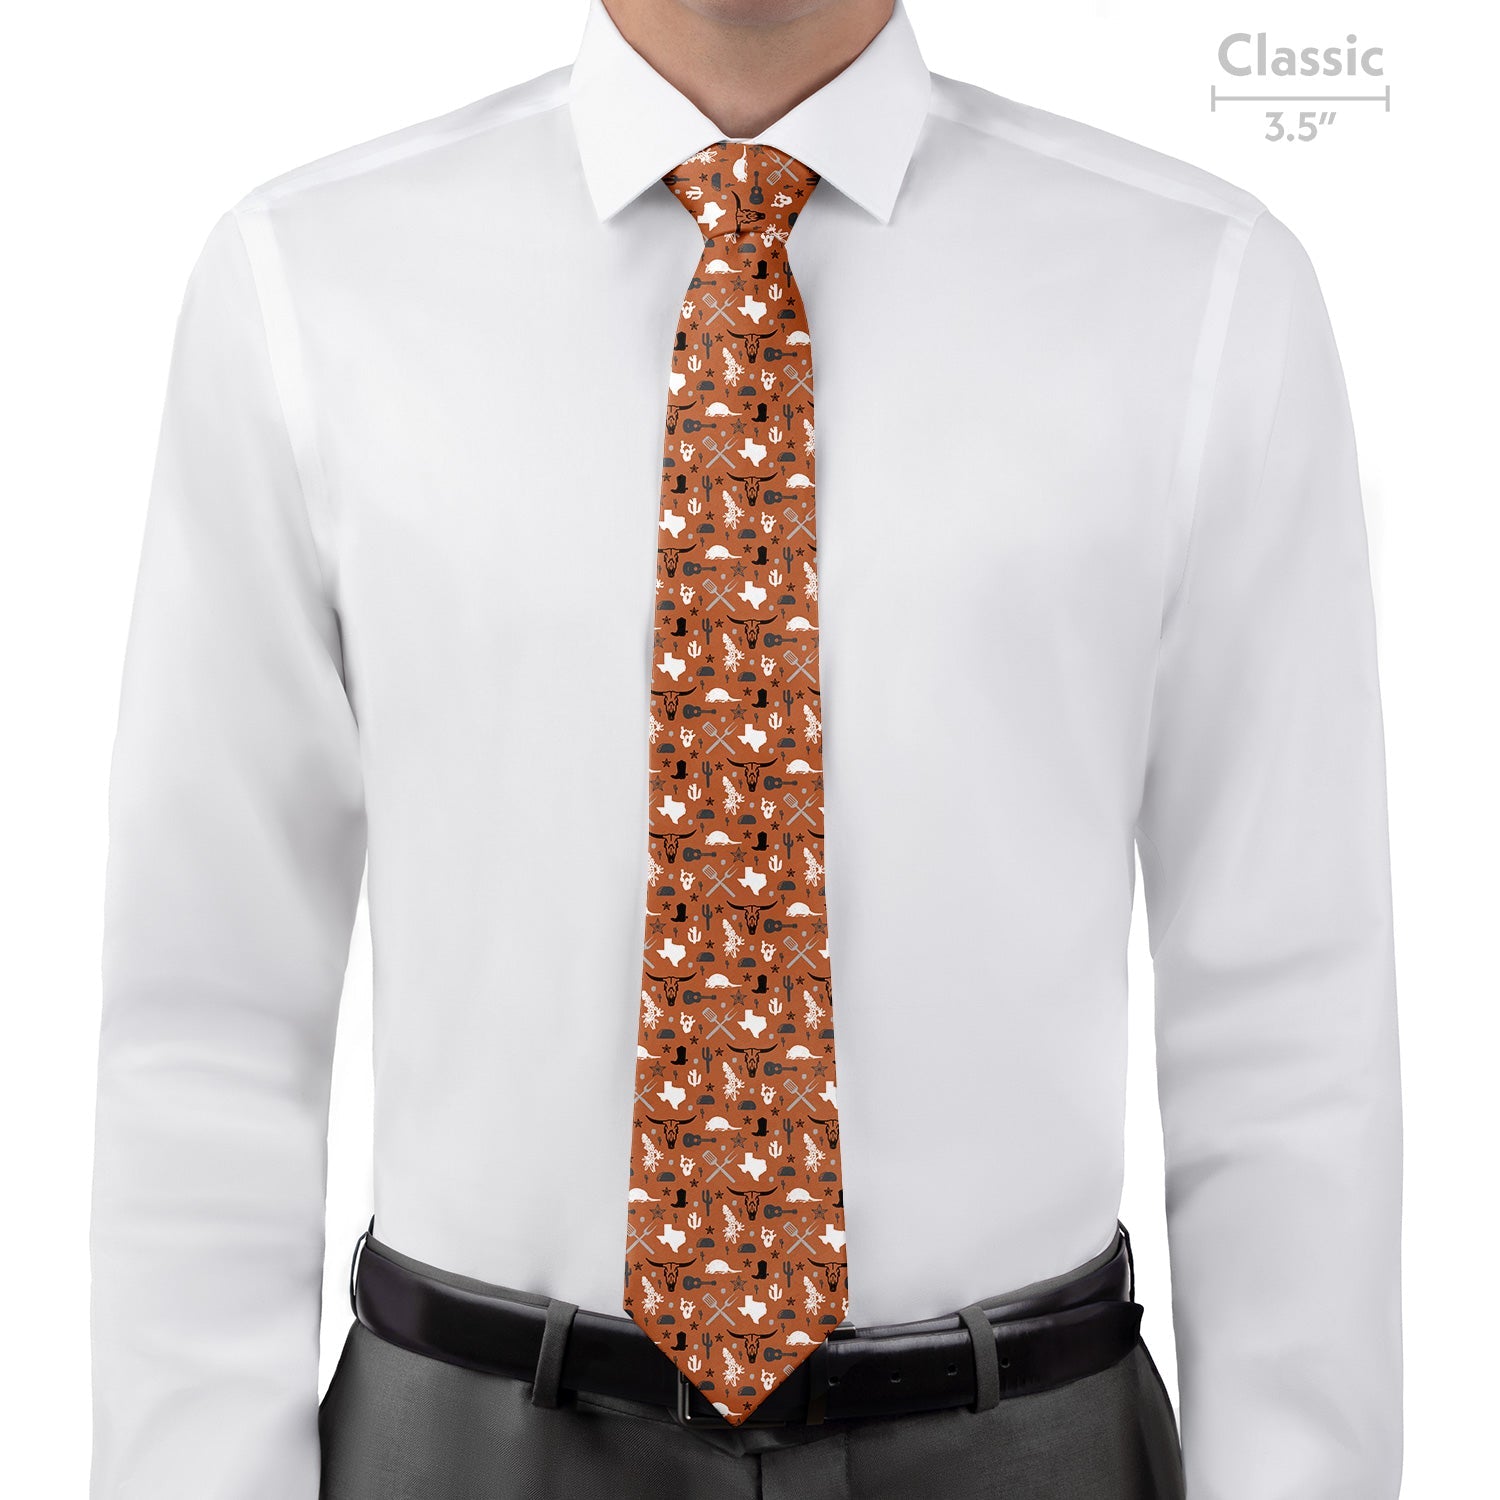 Texas State Heritage Necktie - Classic 3.5" -  - Knotty Tie Co.